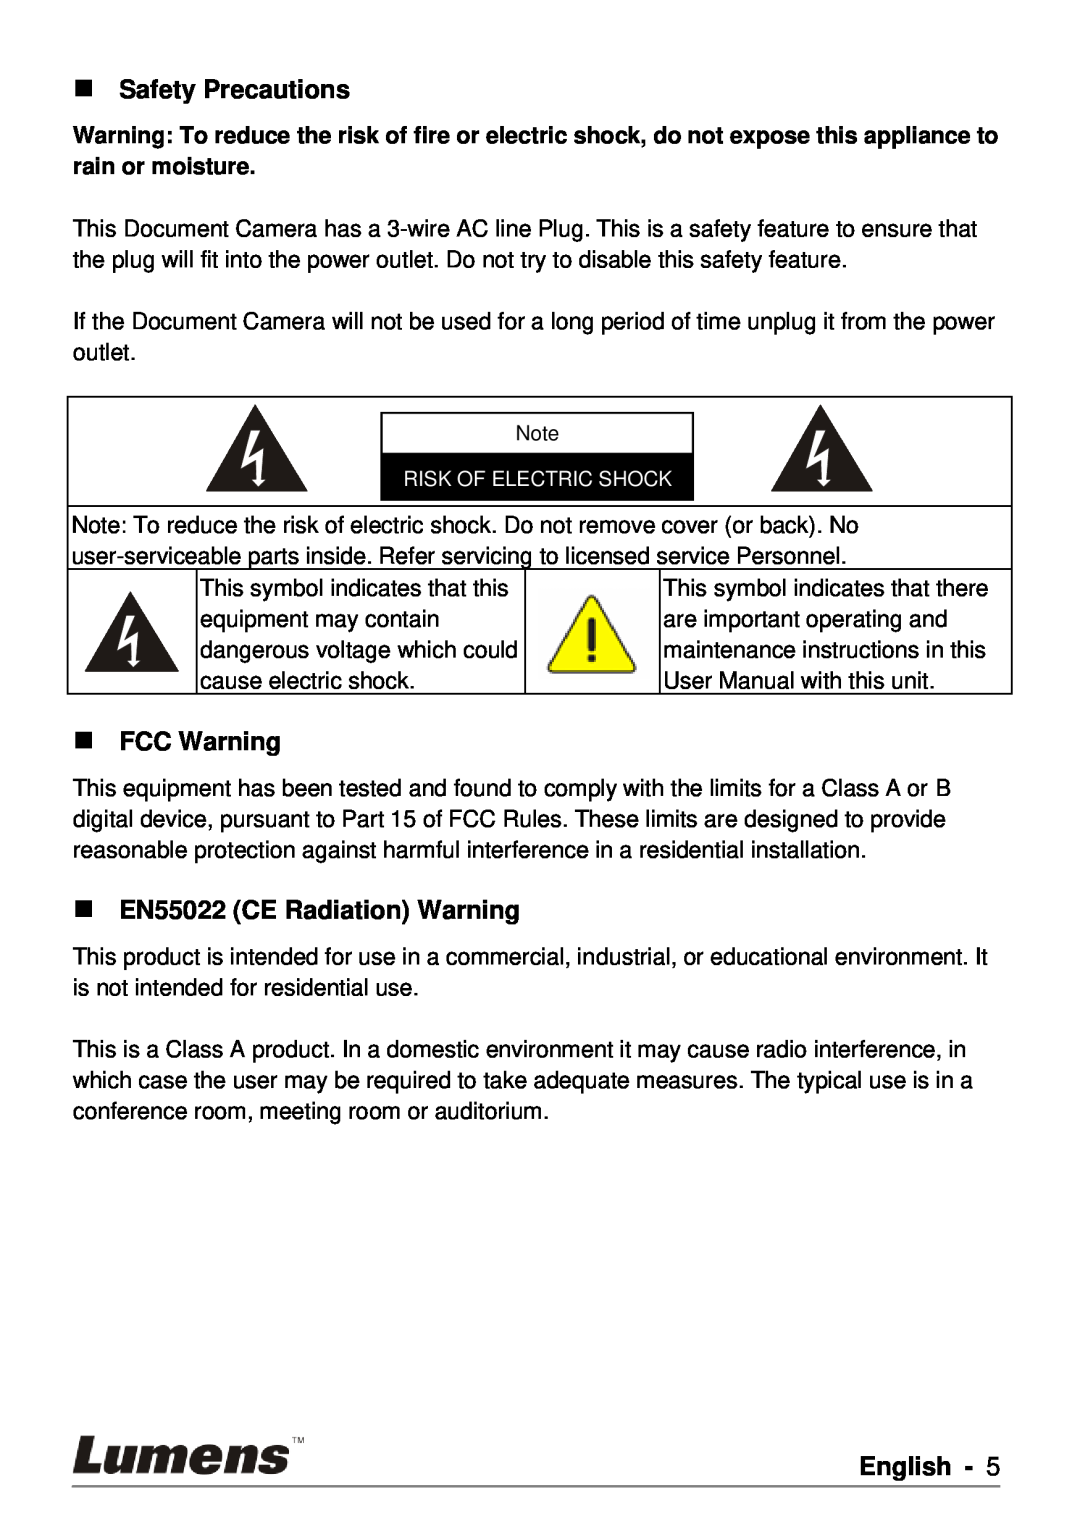 Lumens Technology PS750 user manual  Safety Precautions,  FCC Warning,  EN55022 CE Radiation Warning, English 